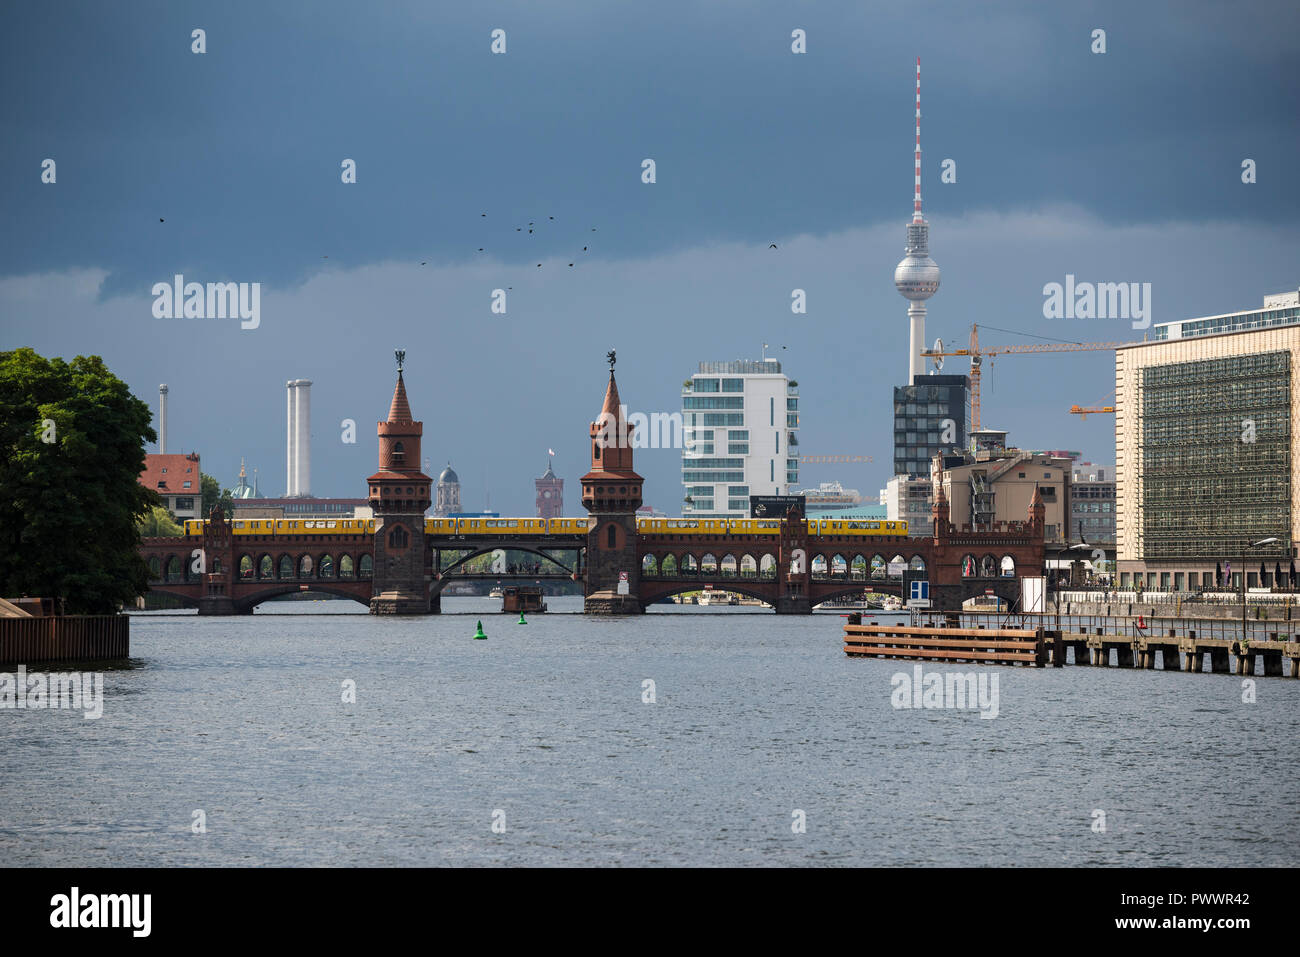 Berlin. Germany. The Oberbaum bridge spans the River Spree connecting Friedrichschain & Kreuzberg. Stock Photo